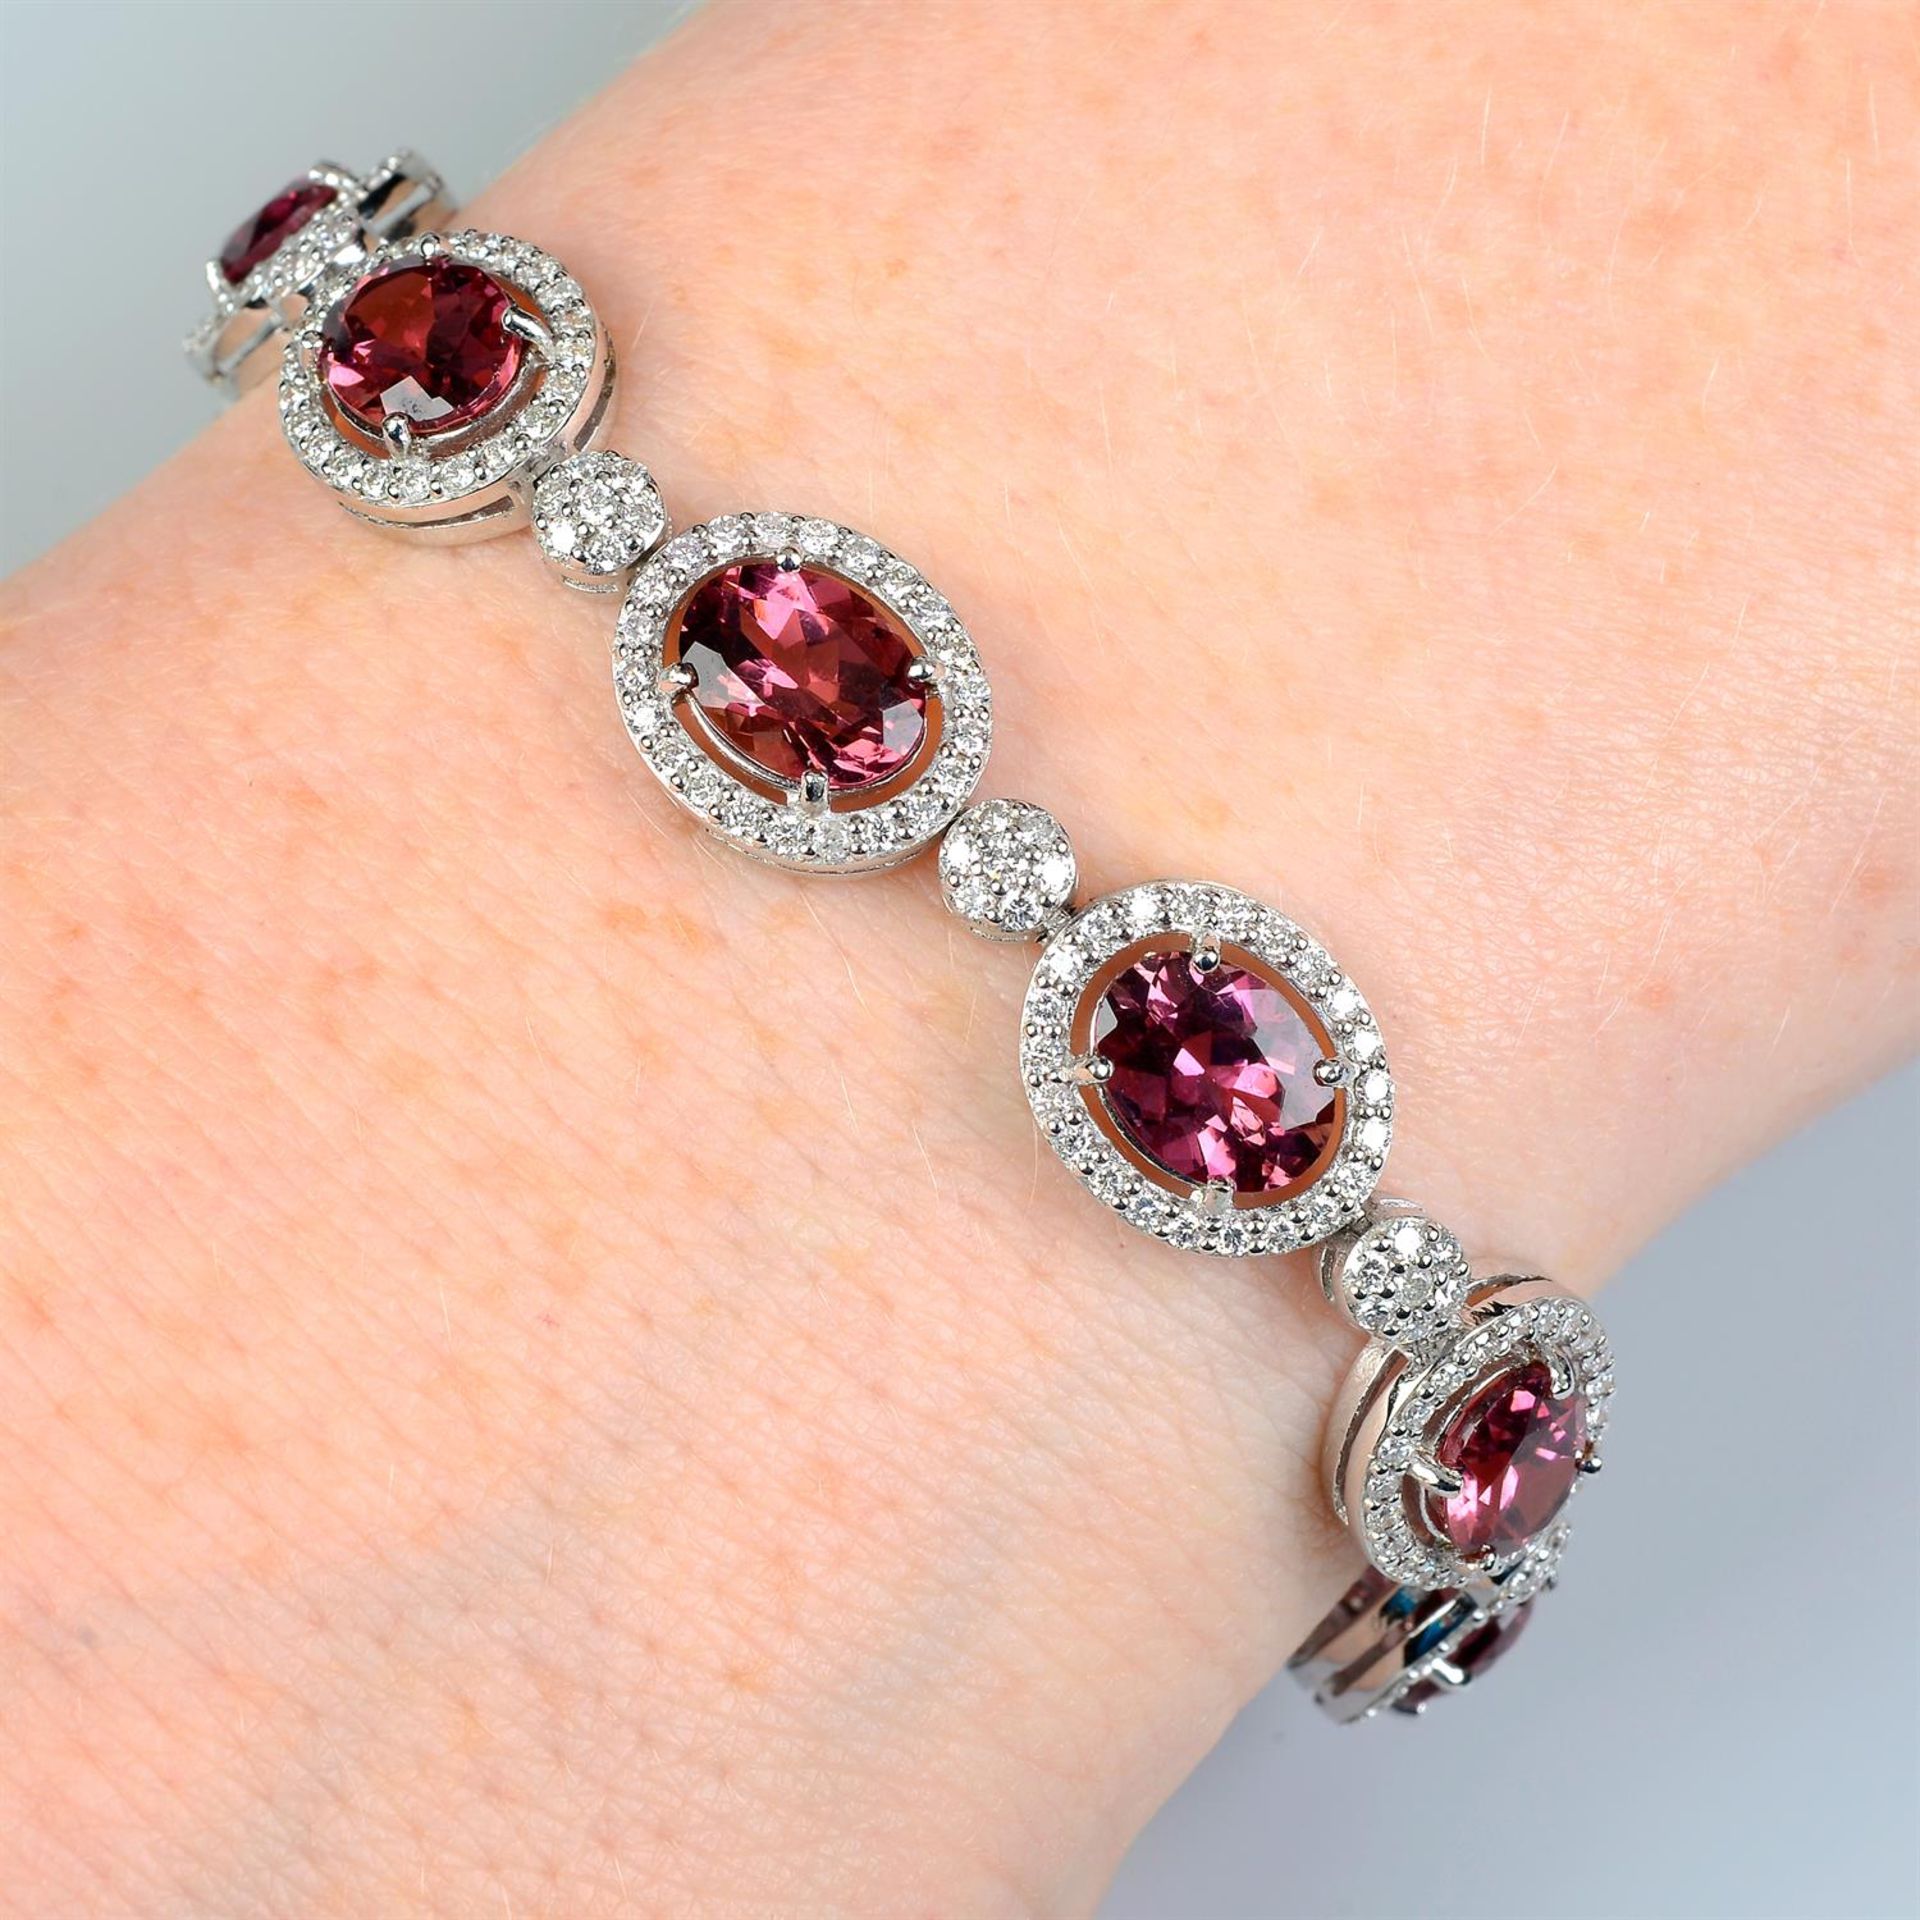 A pink tourmaline and diamond bracelet.